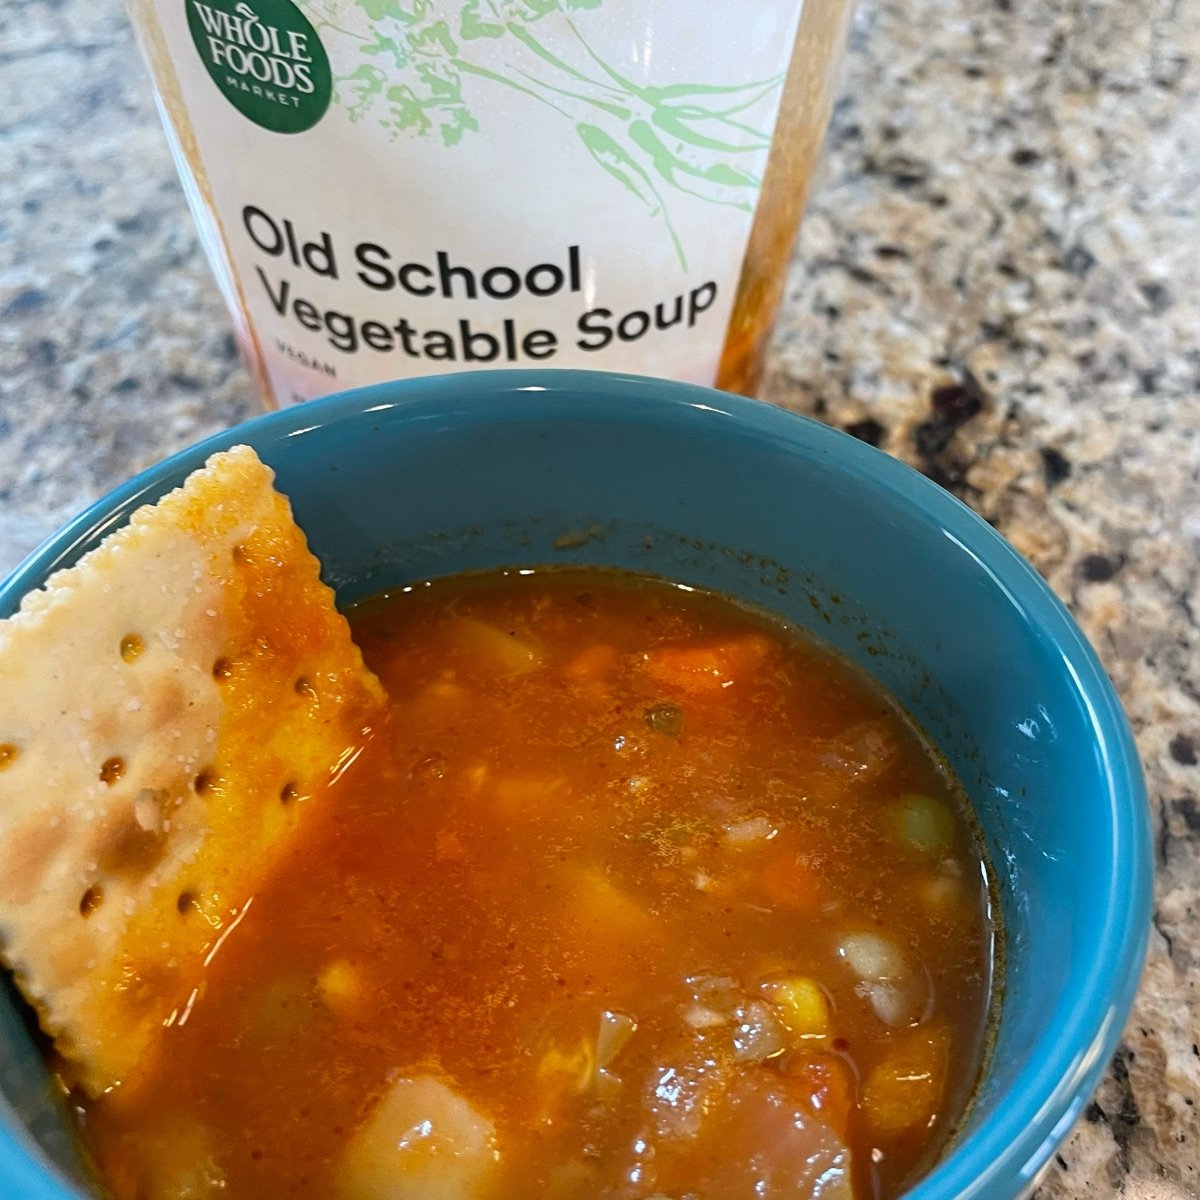 Whole Foods Market Old School Vegetable Soup Reviews